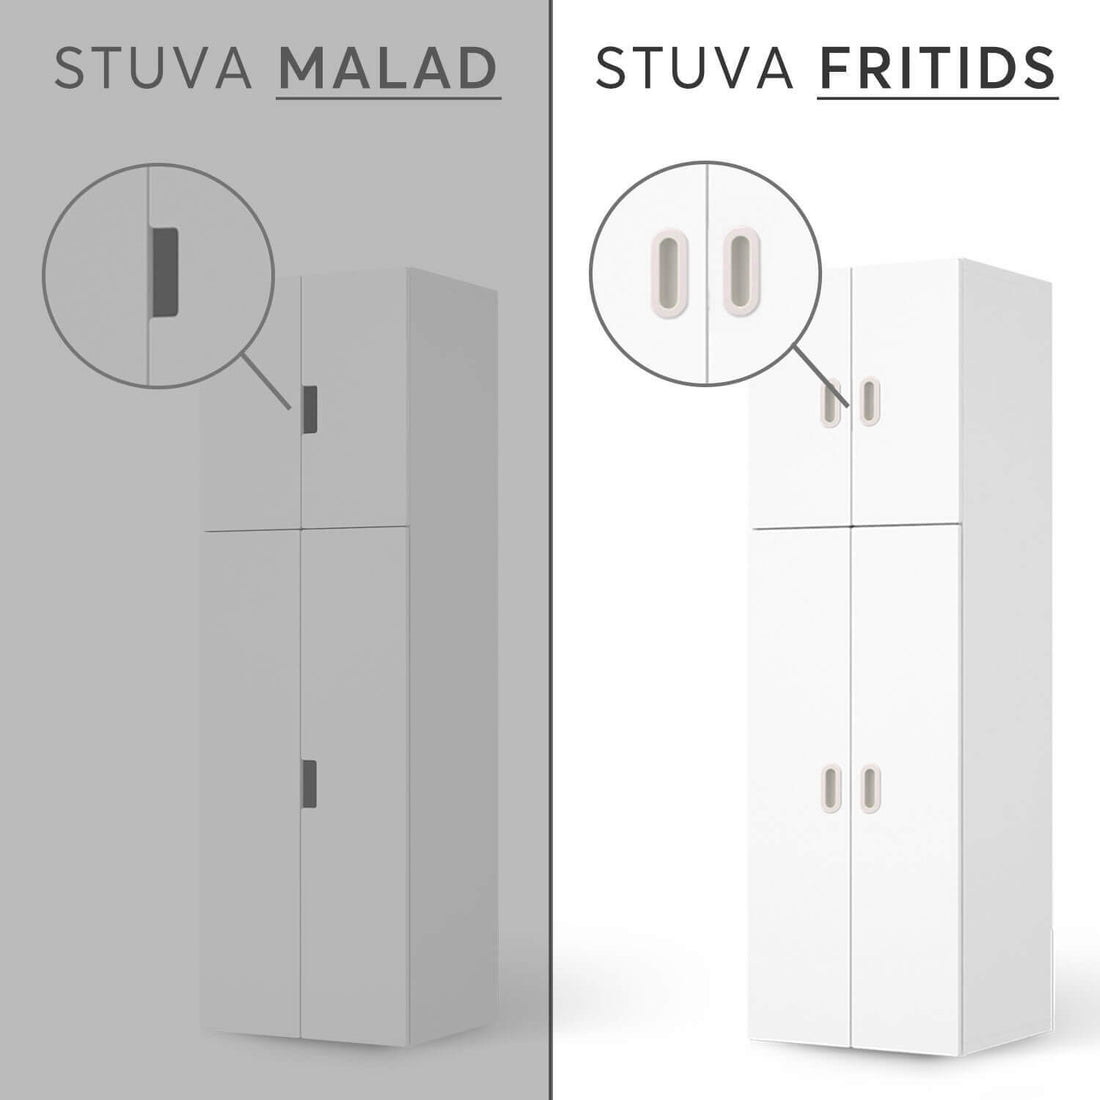 Vergleich IKEA Stuva Fritids / Malad - Cars